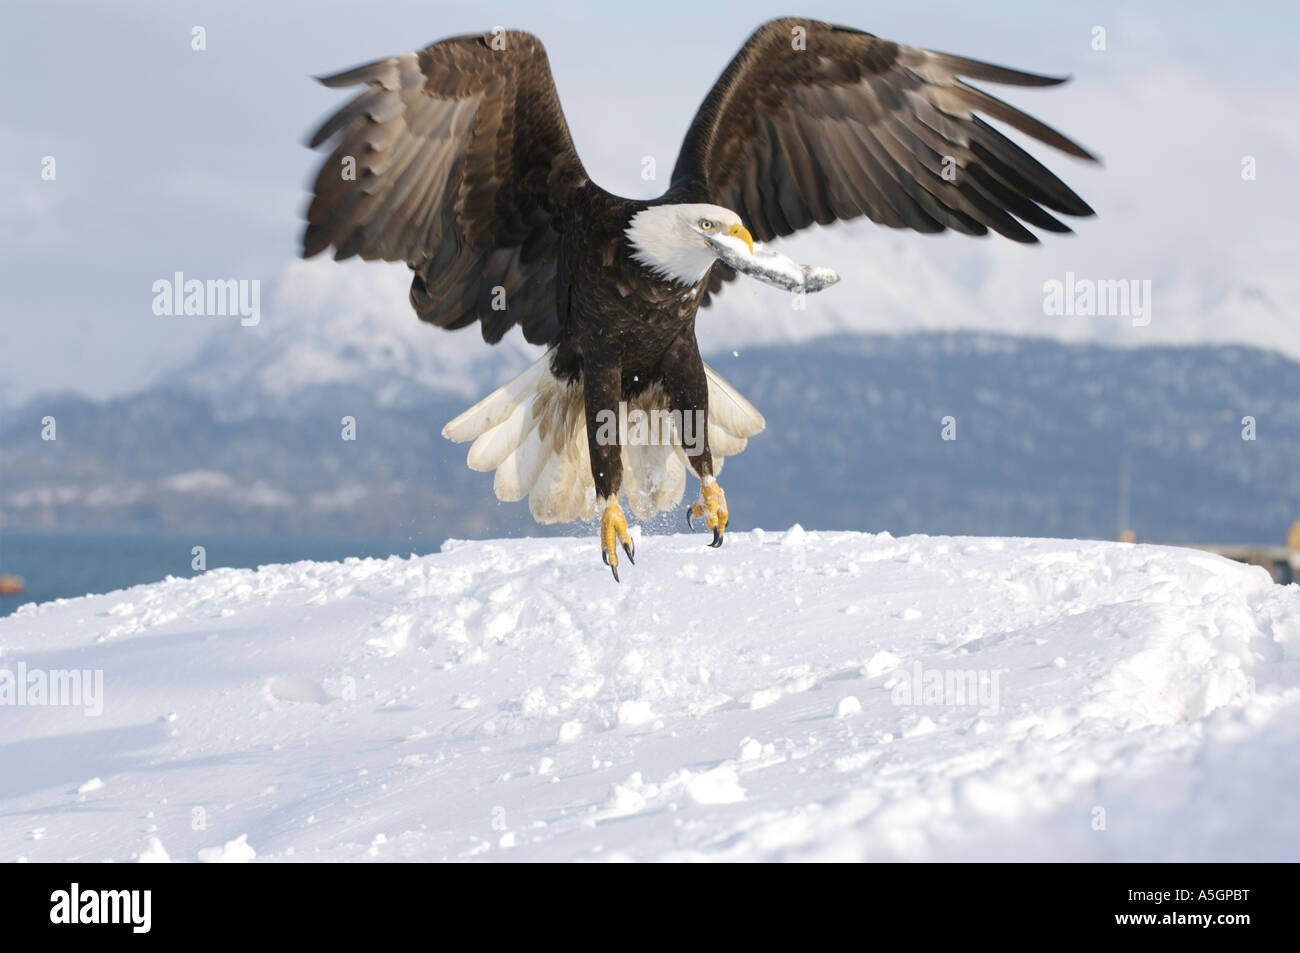 Bald eagle holding fish beak hi-res stock photography and images - Alamy